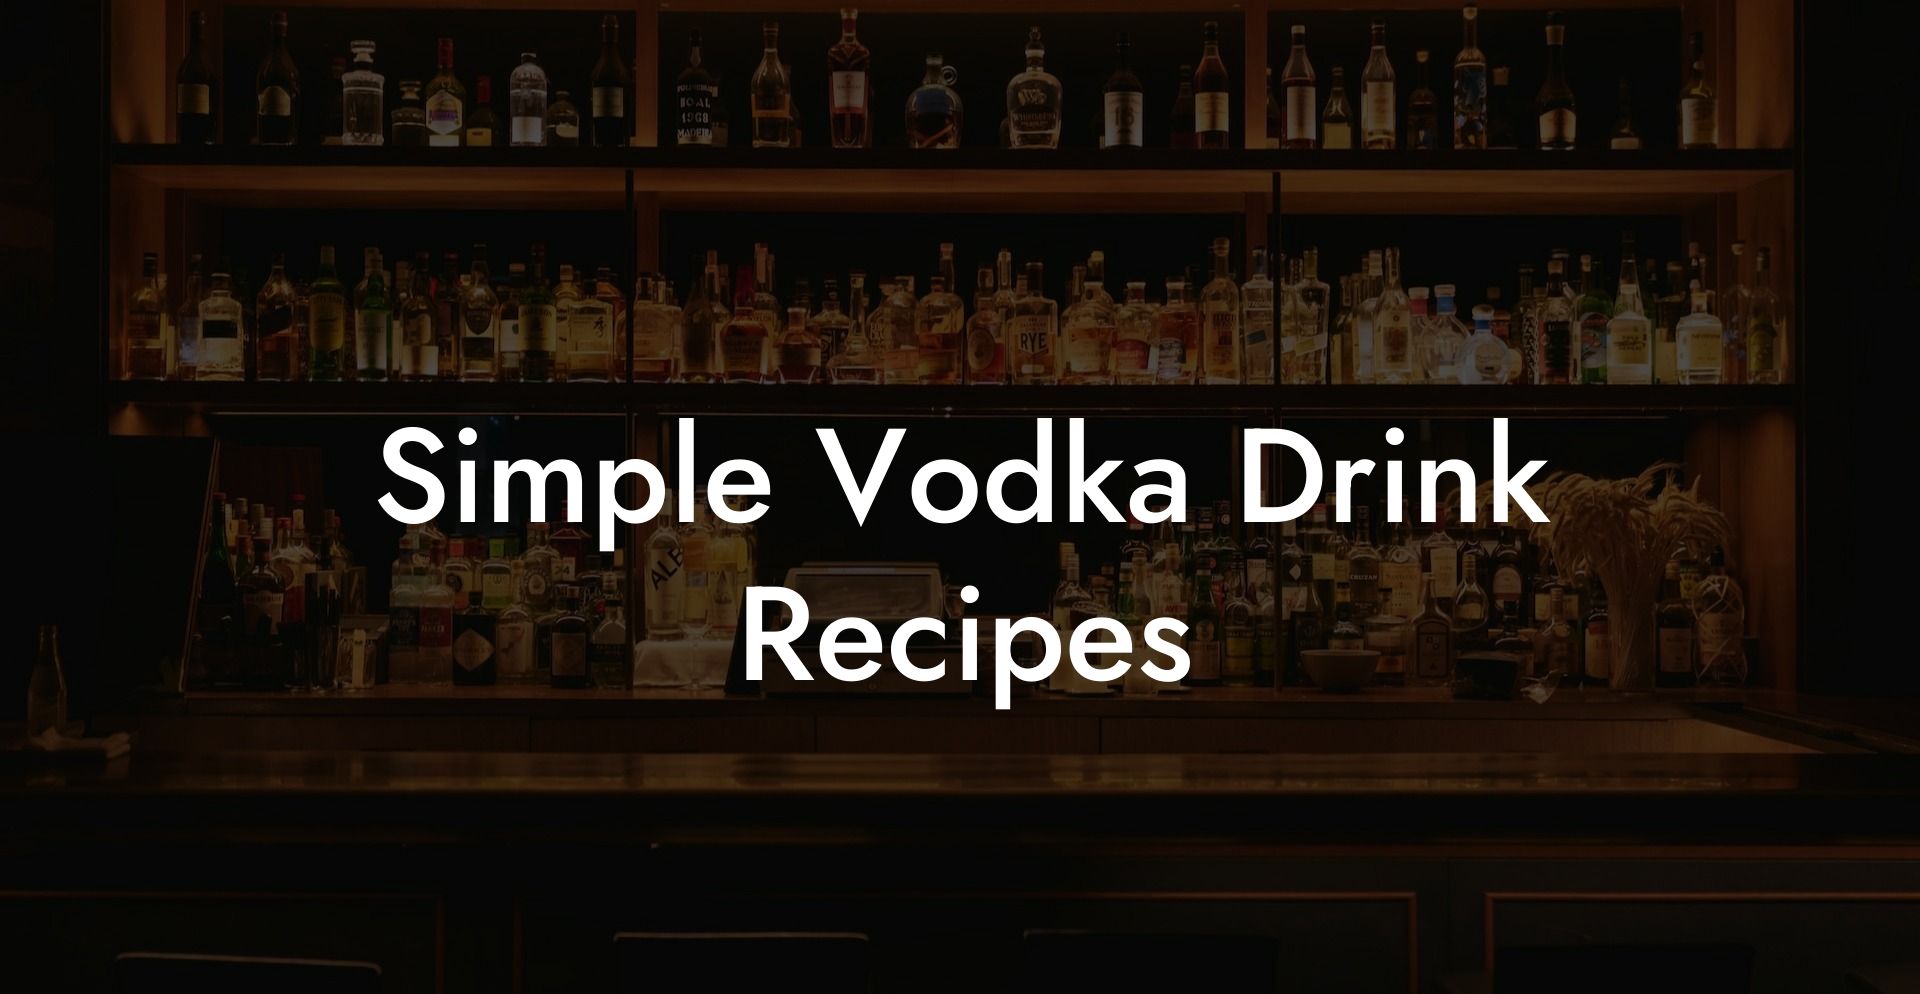 Simple Vodka Drink Recipes